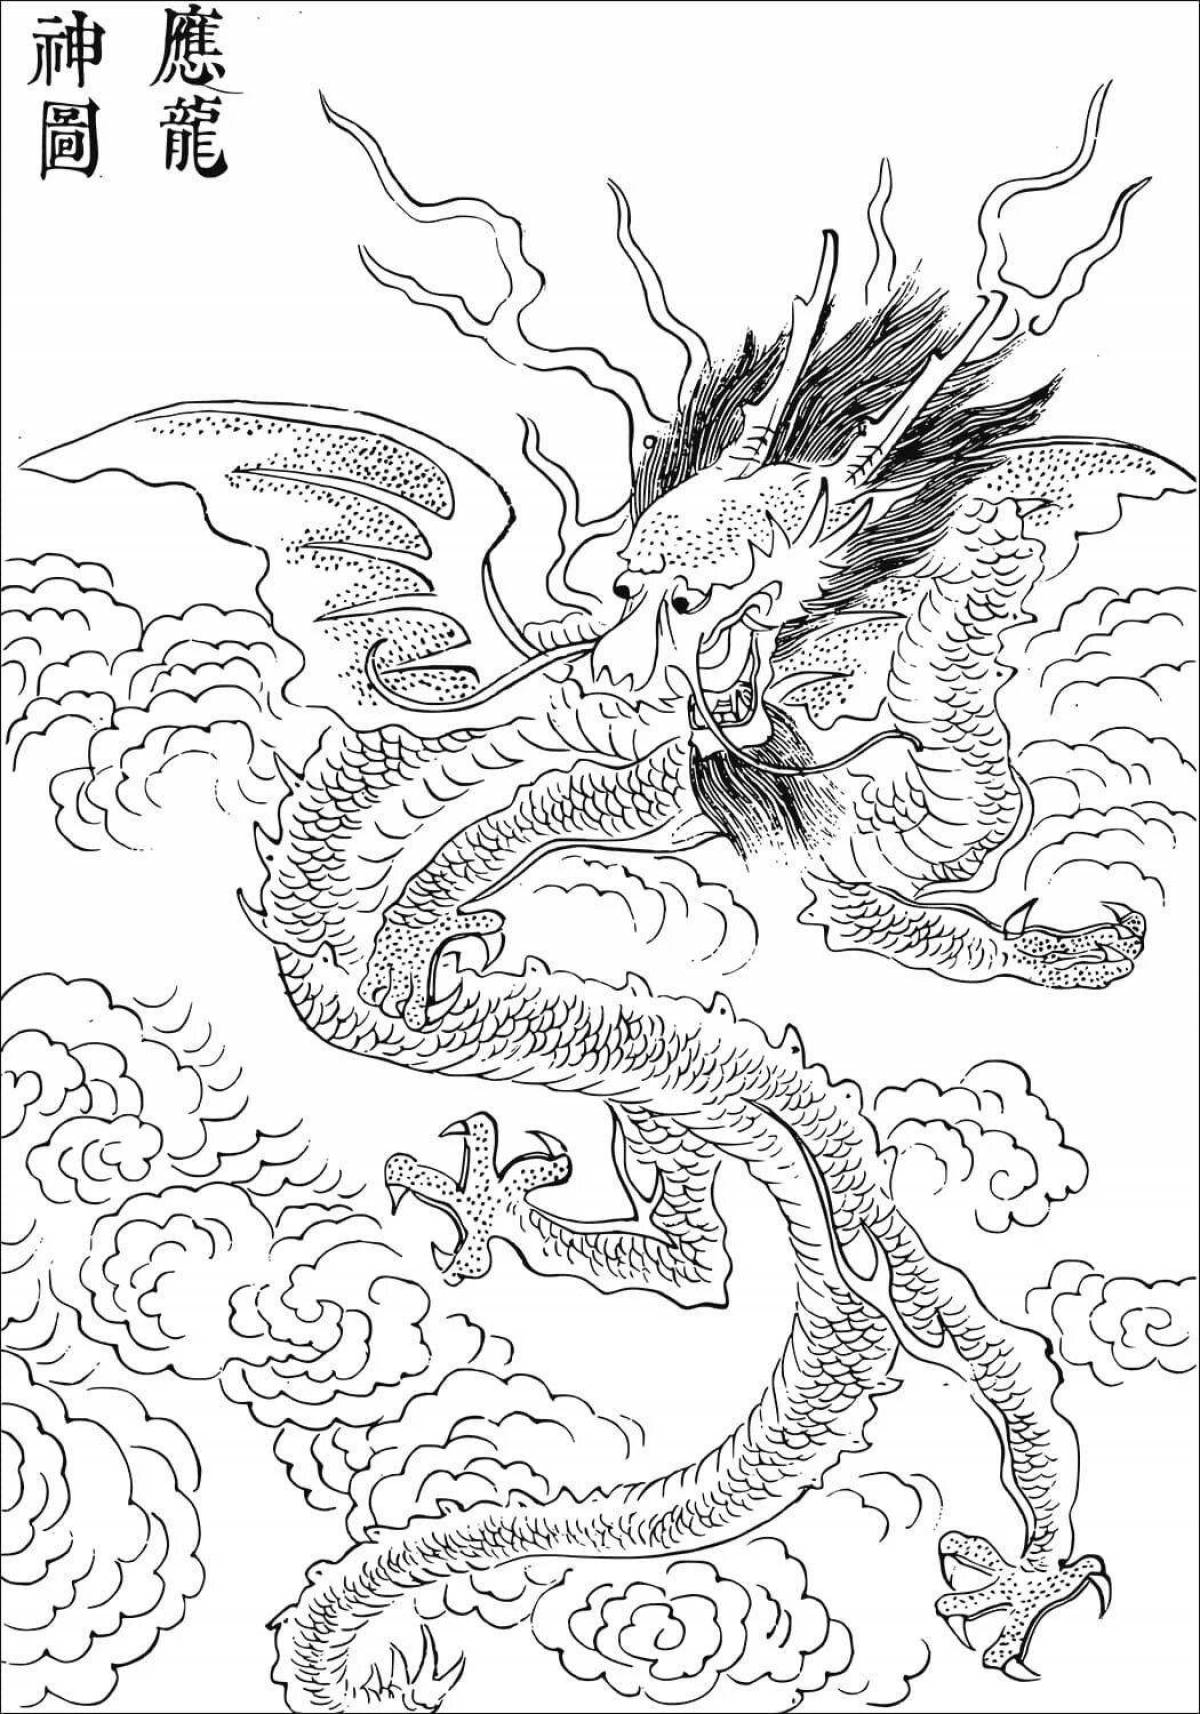 Brilliant japanese dragon coloring book